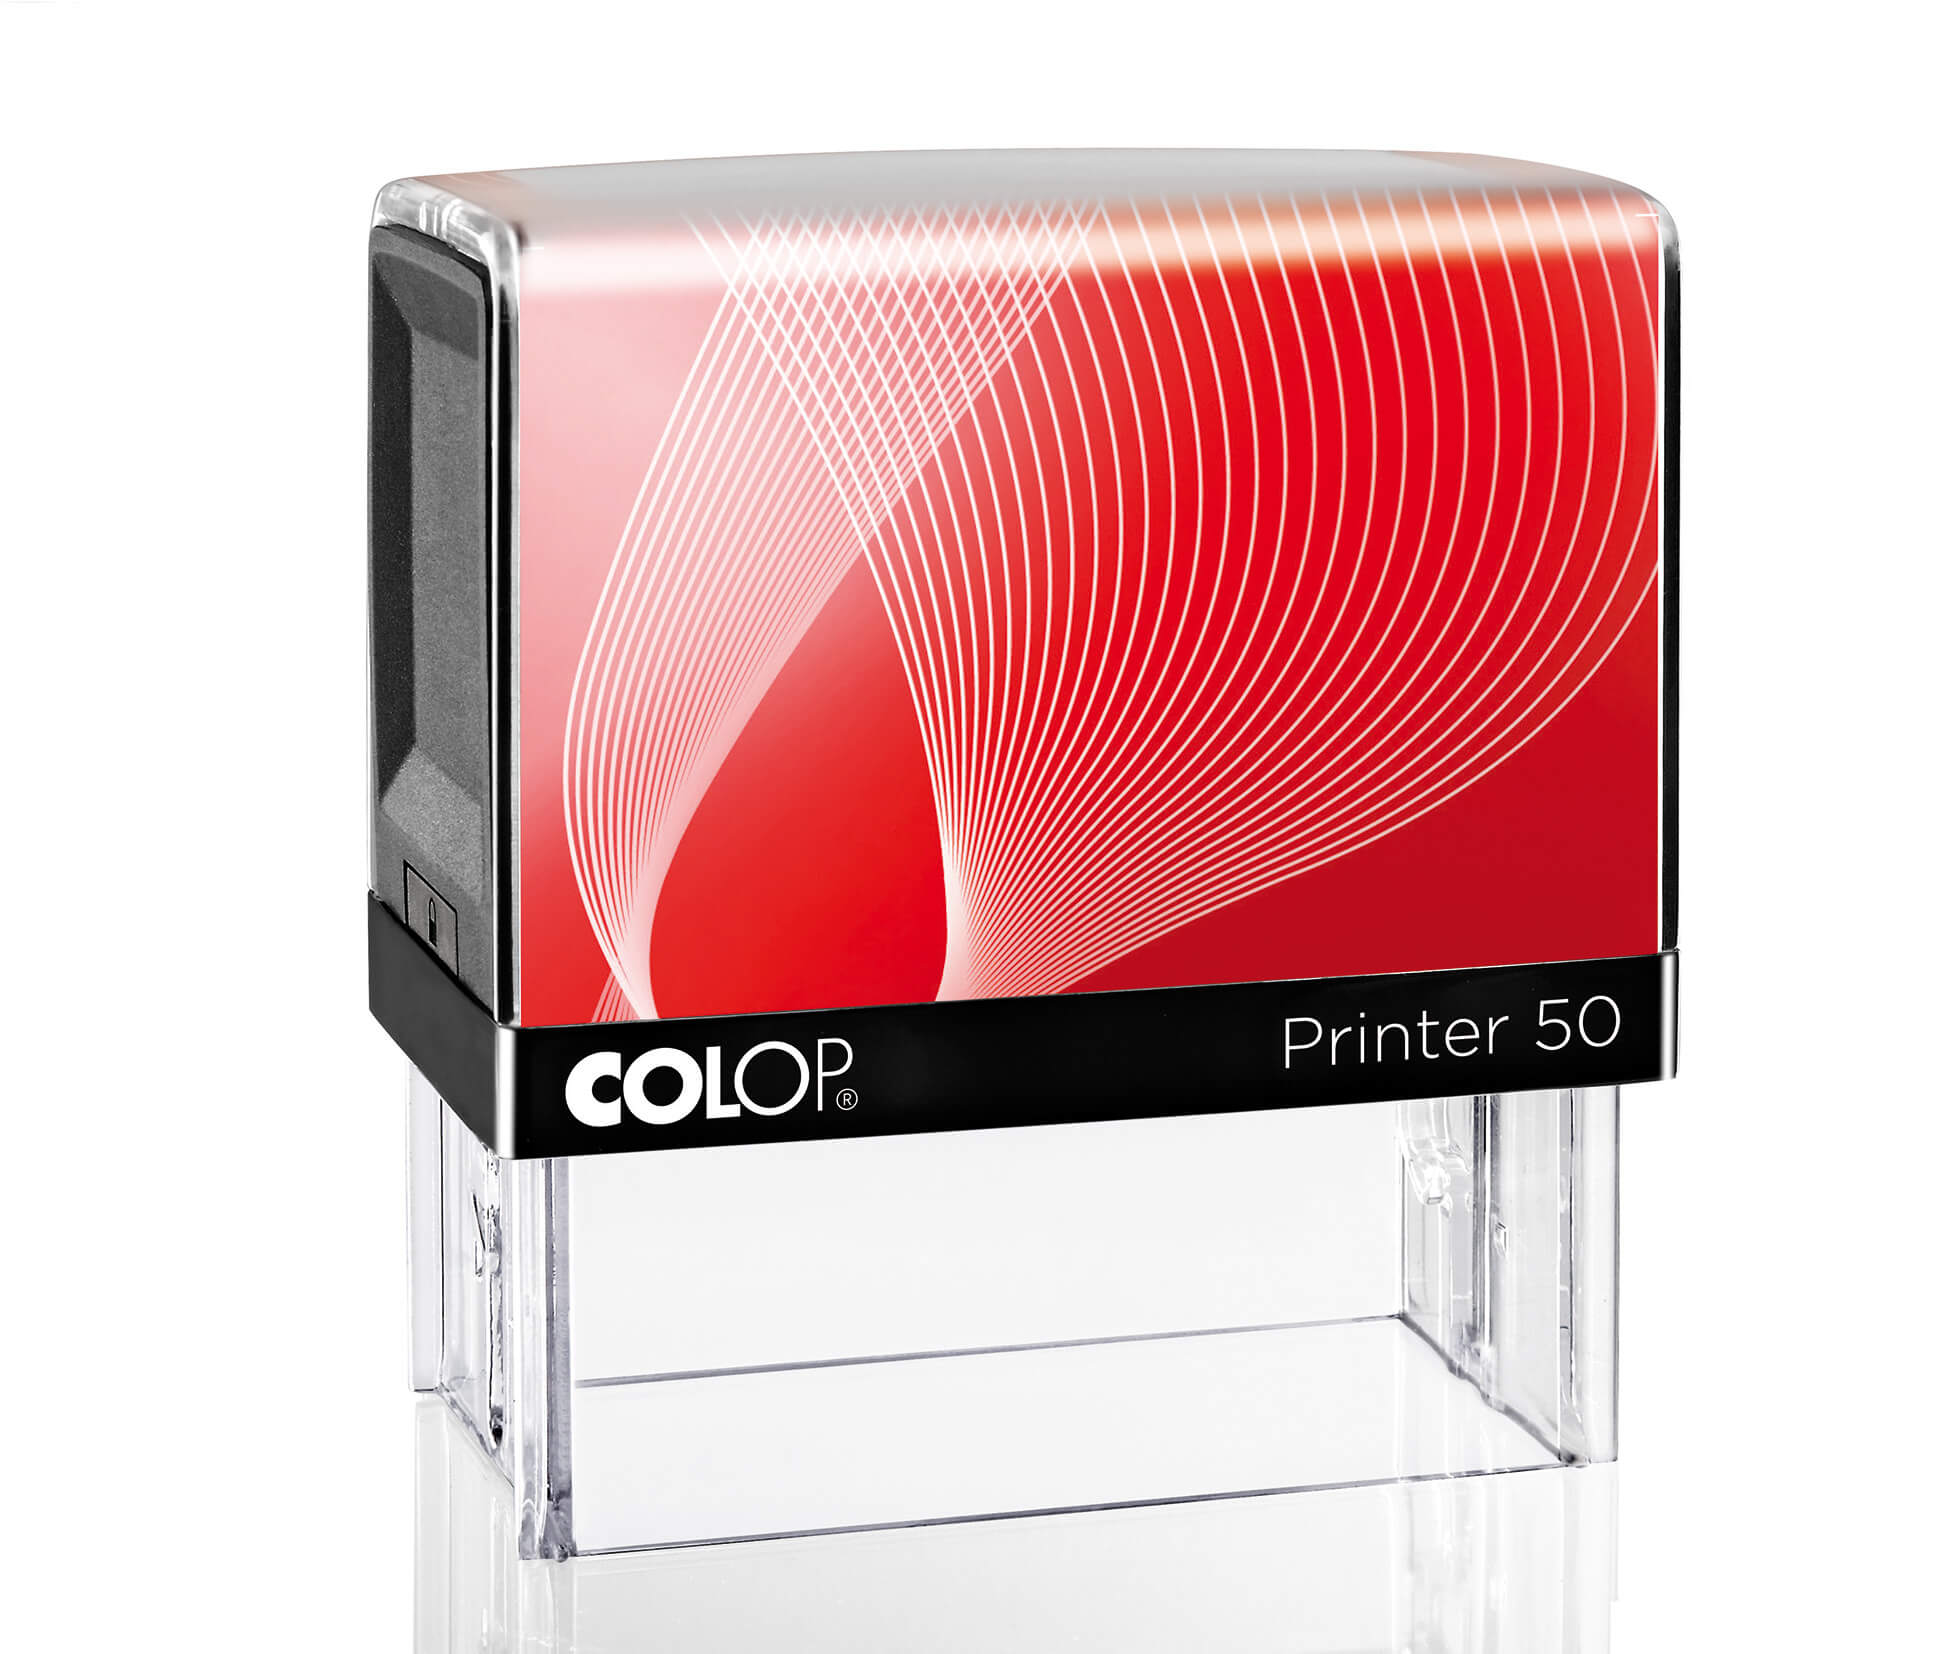  Printer 50